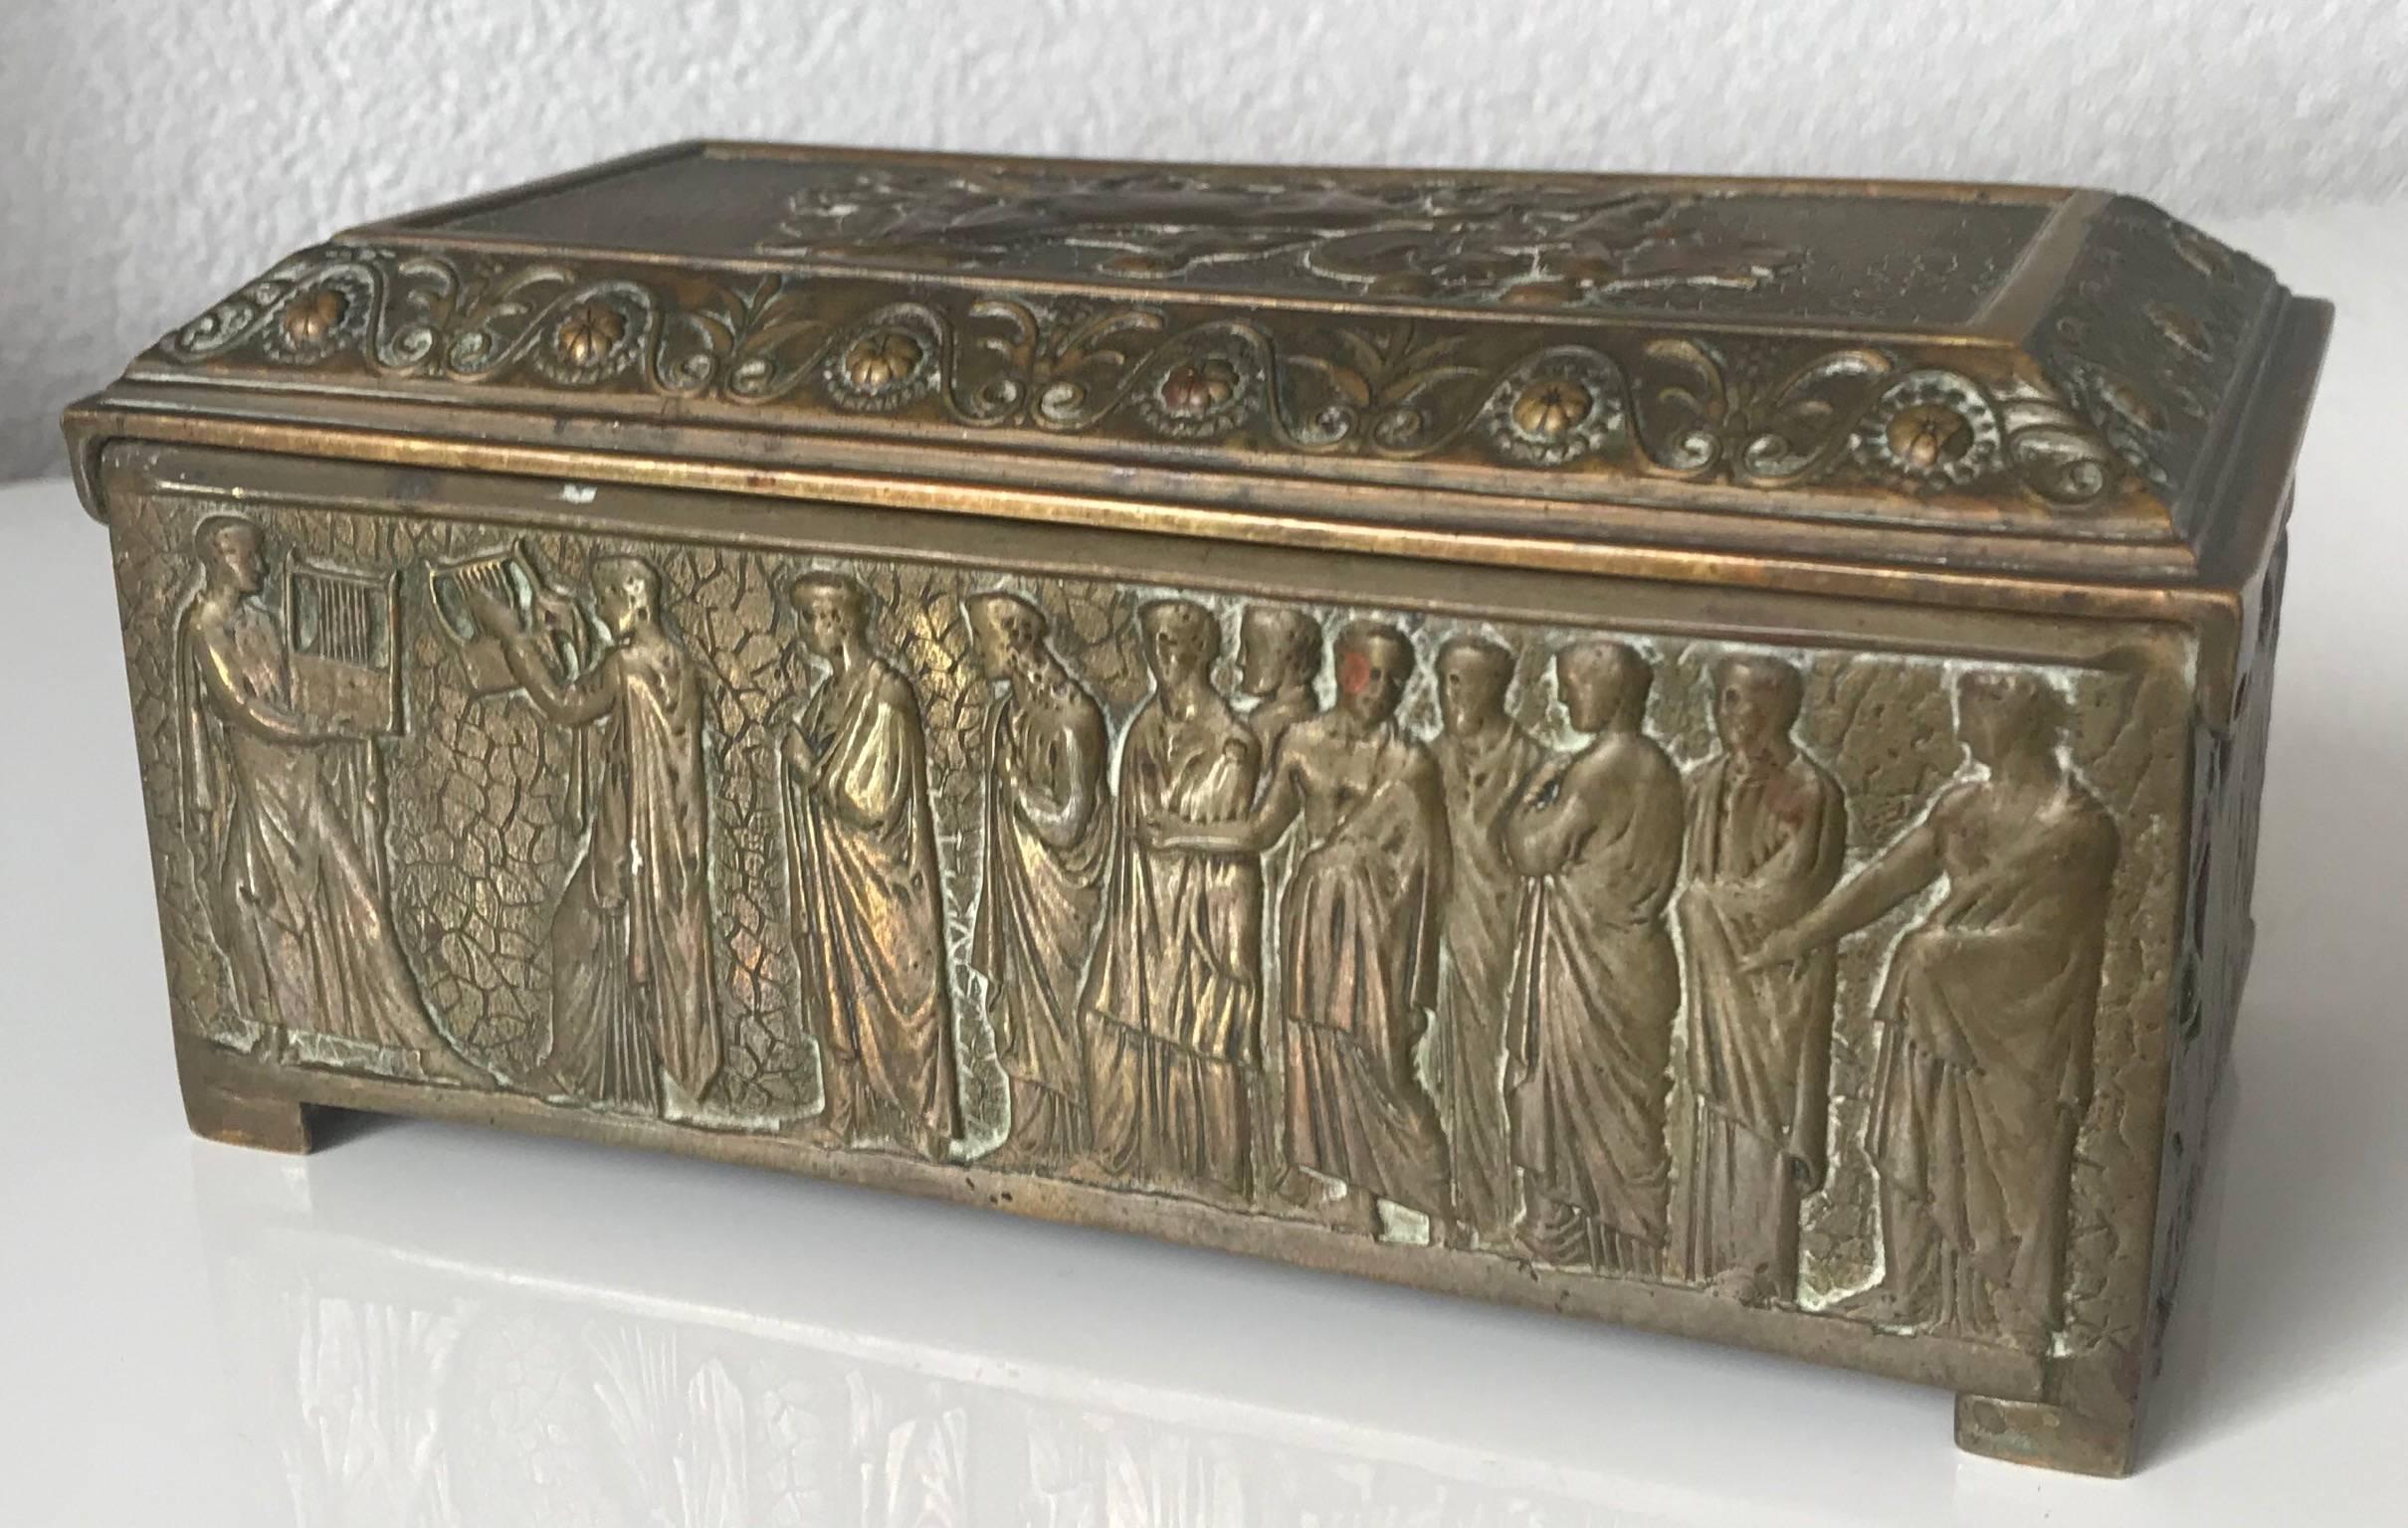 Empire Revival Rare Bronze Sculptural Casket / Box Panels with Historical Roman Empire Scenes For Sale